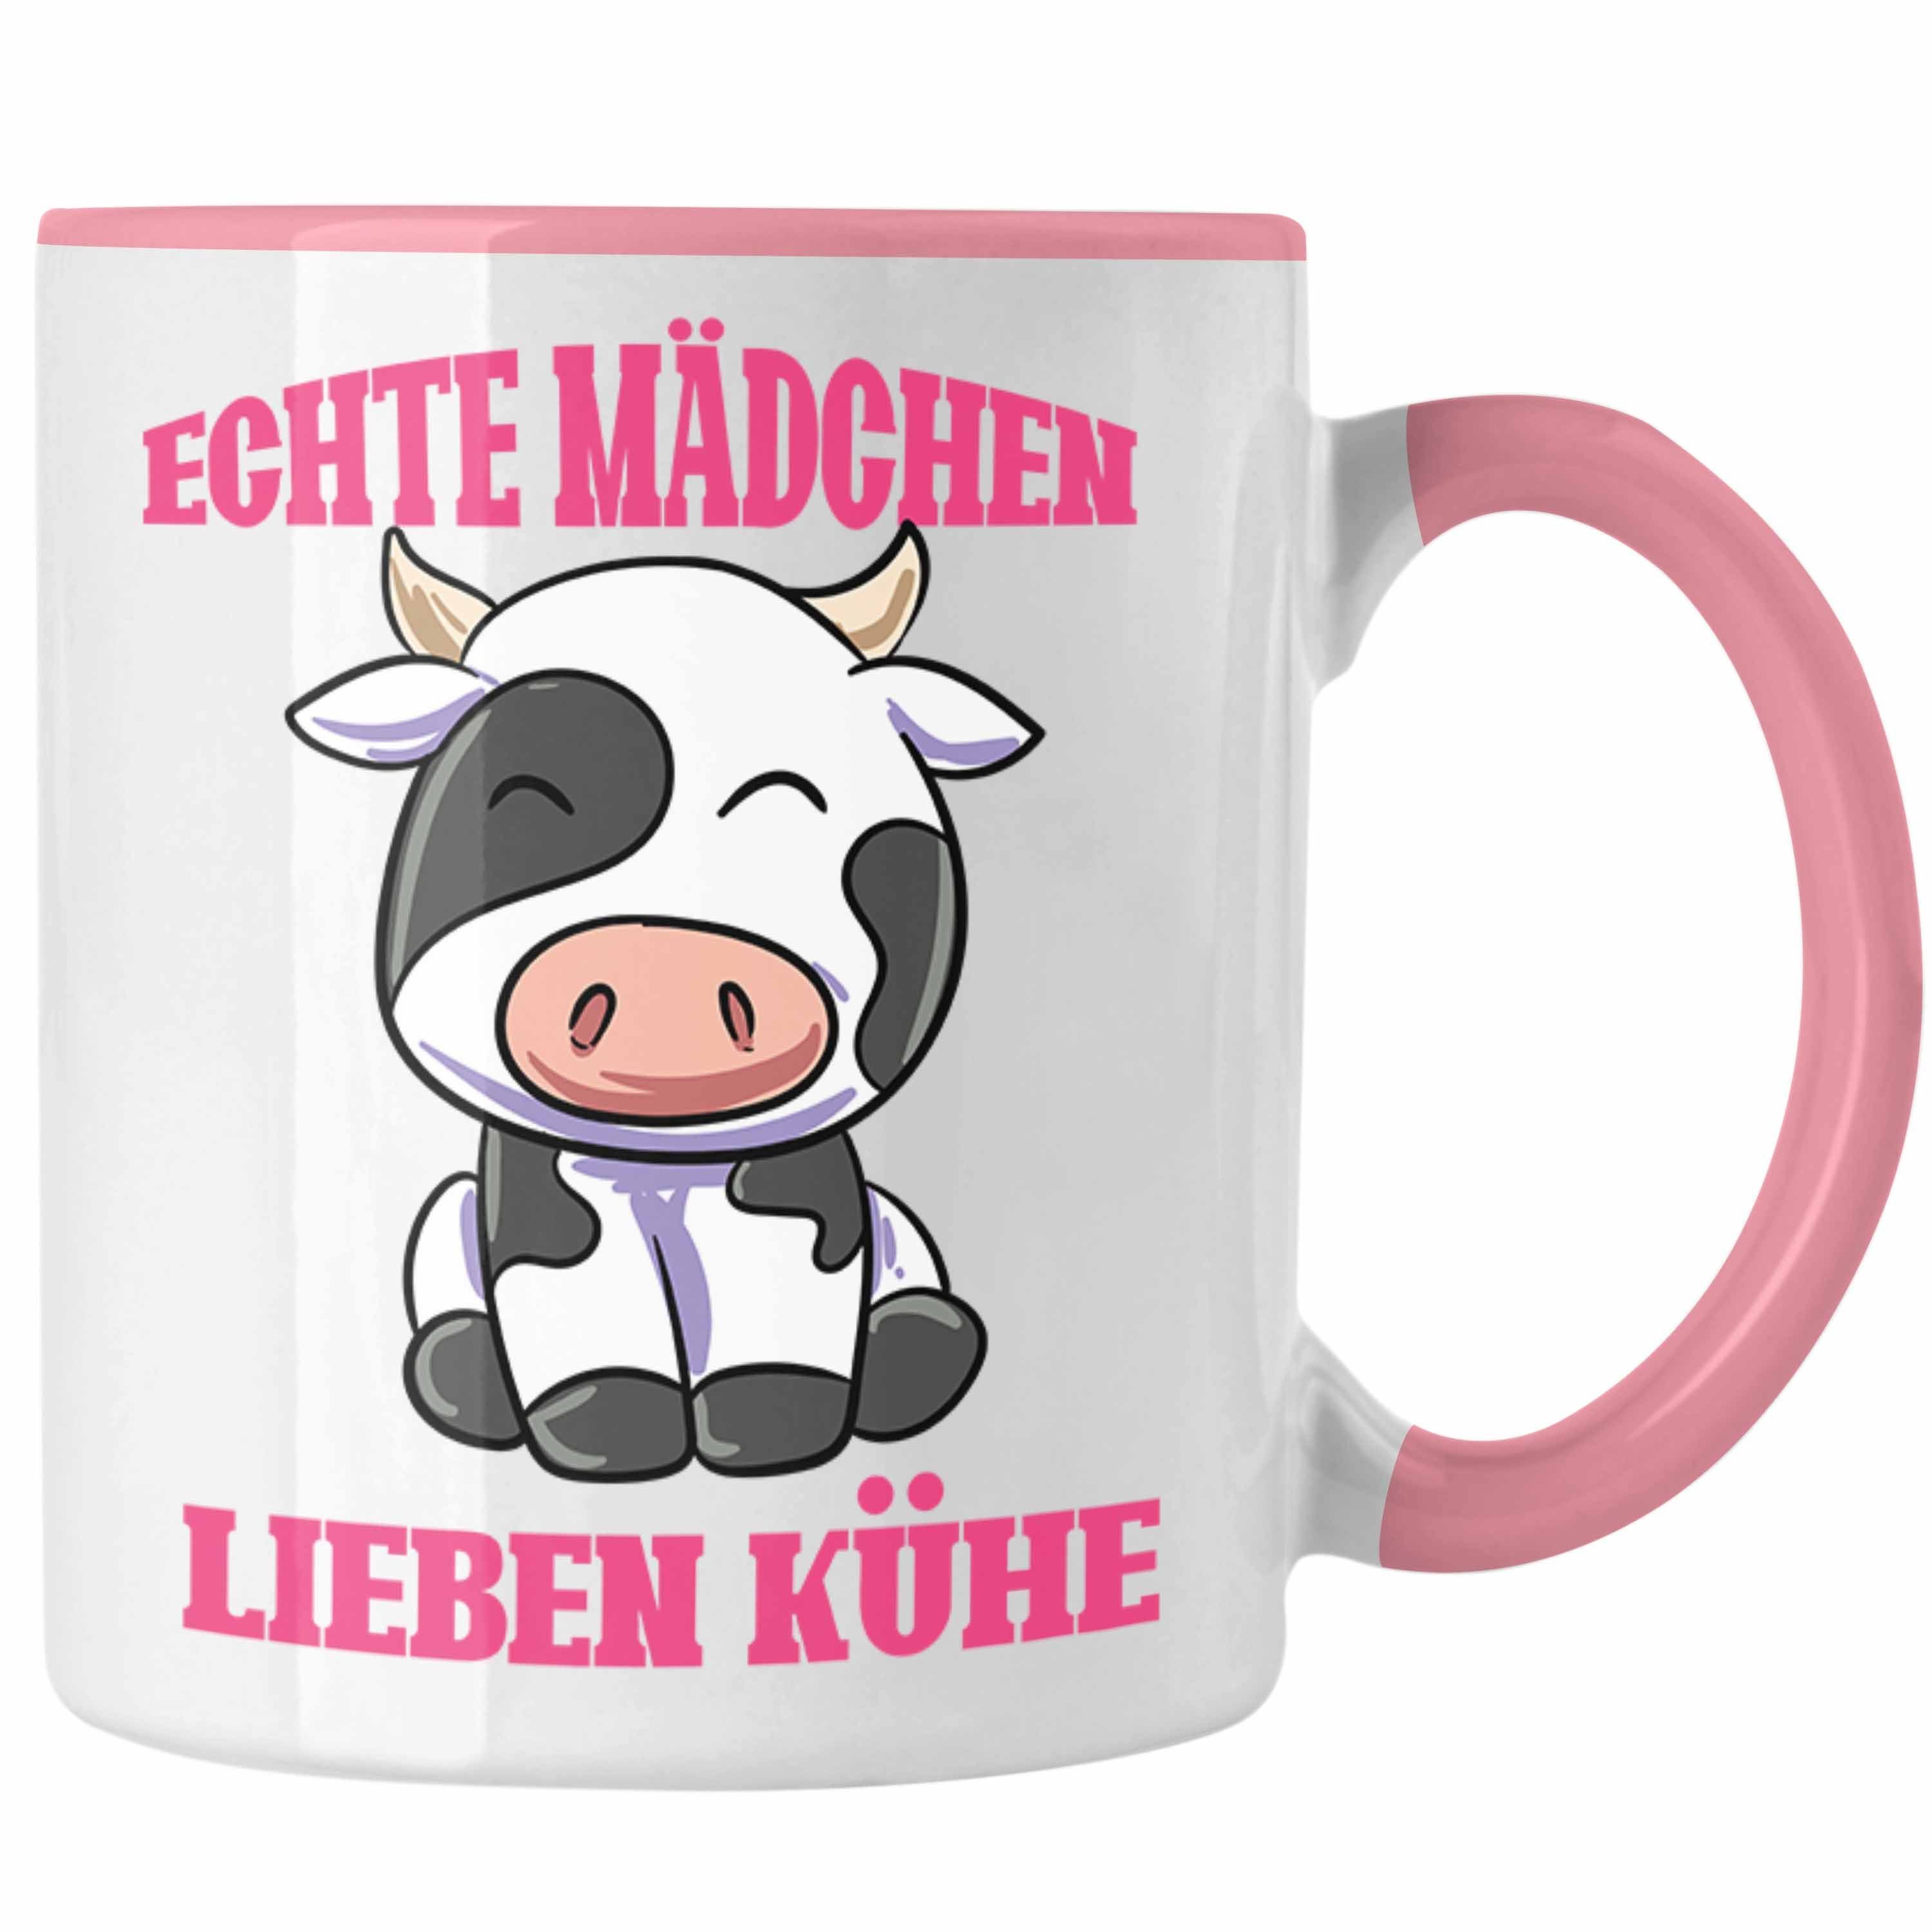 Trendation Tasse Kuh Tasse Geschenk Echte Mädchen Lieben Kühe Landwirtin Bäuerin Gesch Rosa